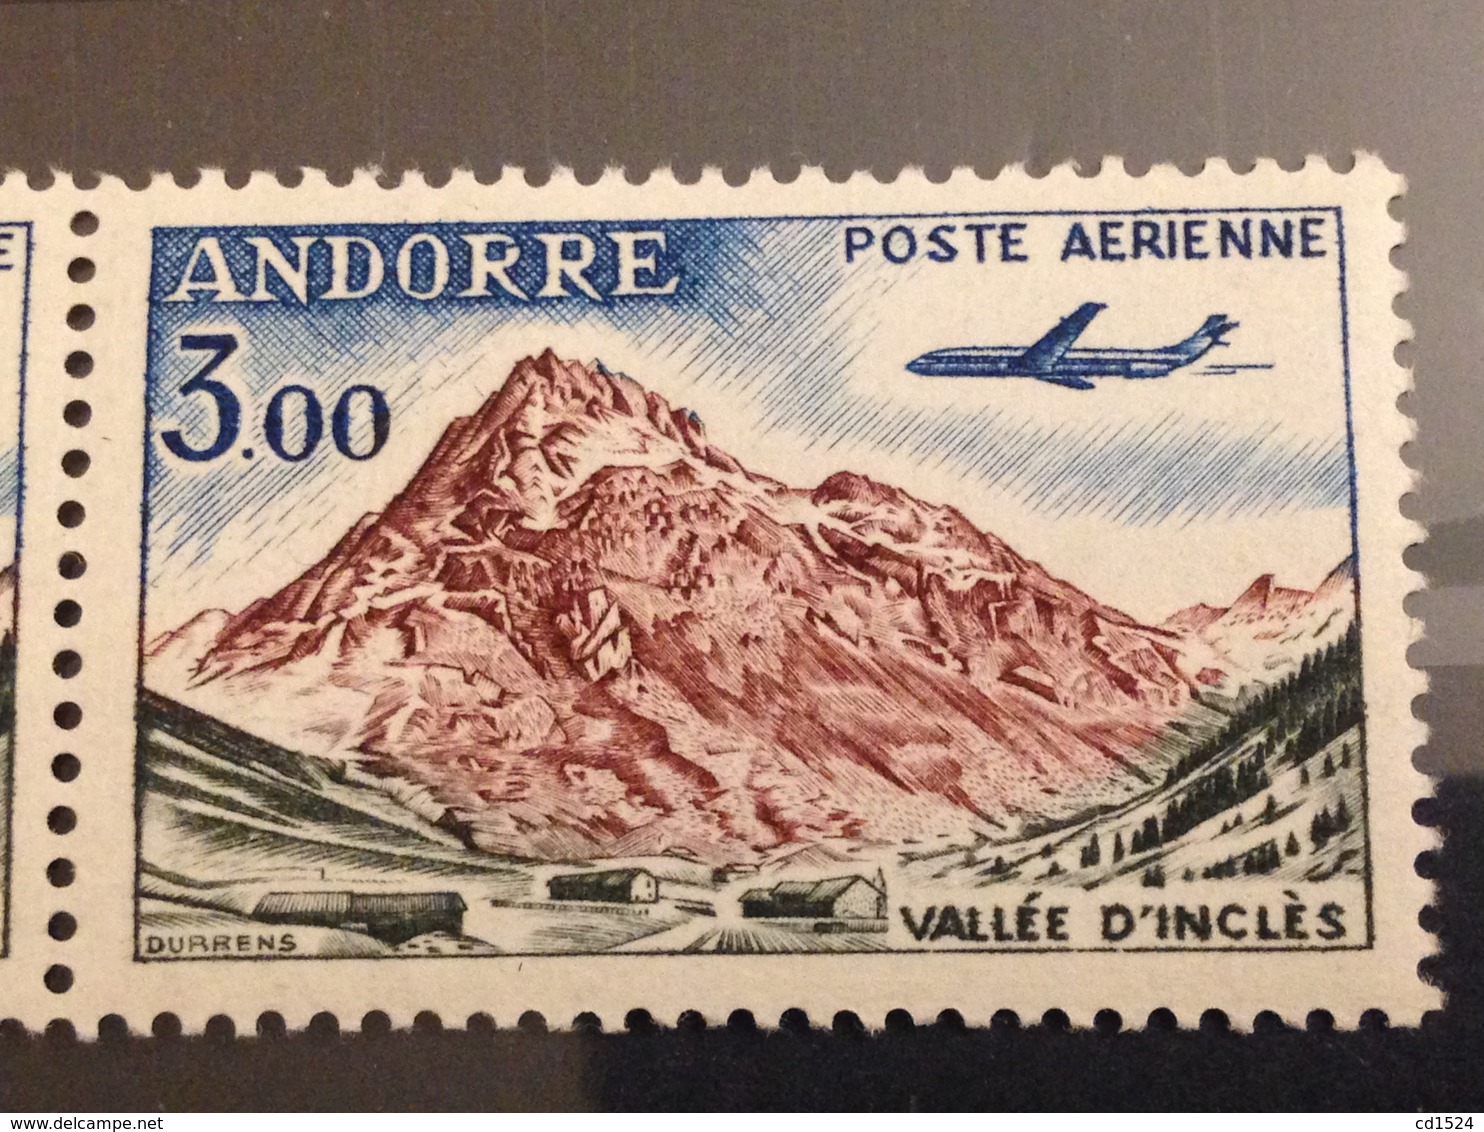 ANDORRE FRANCAIS - Neuf** - Poste Aérienne - 1961 - Airmail